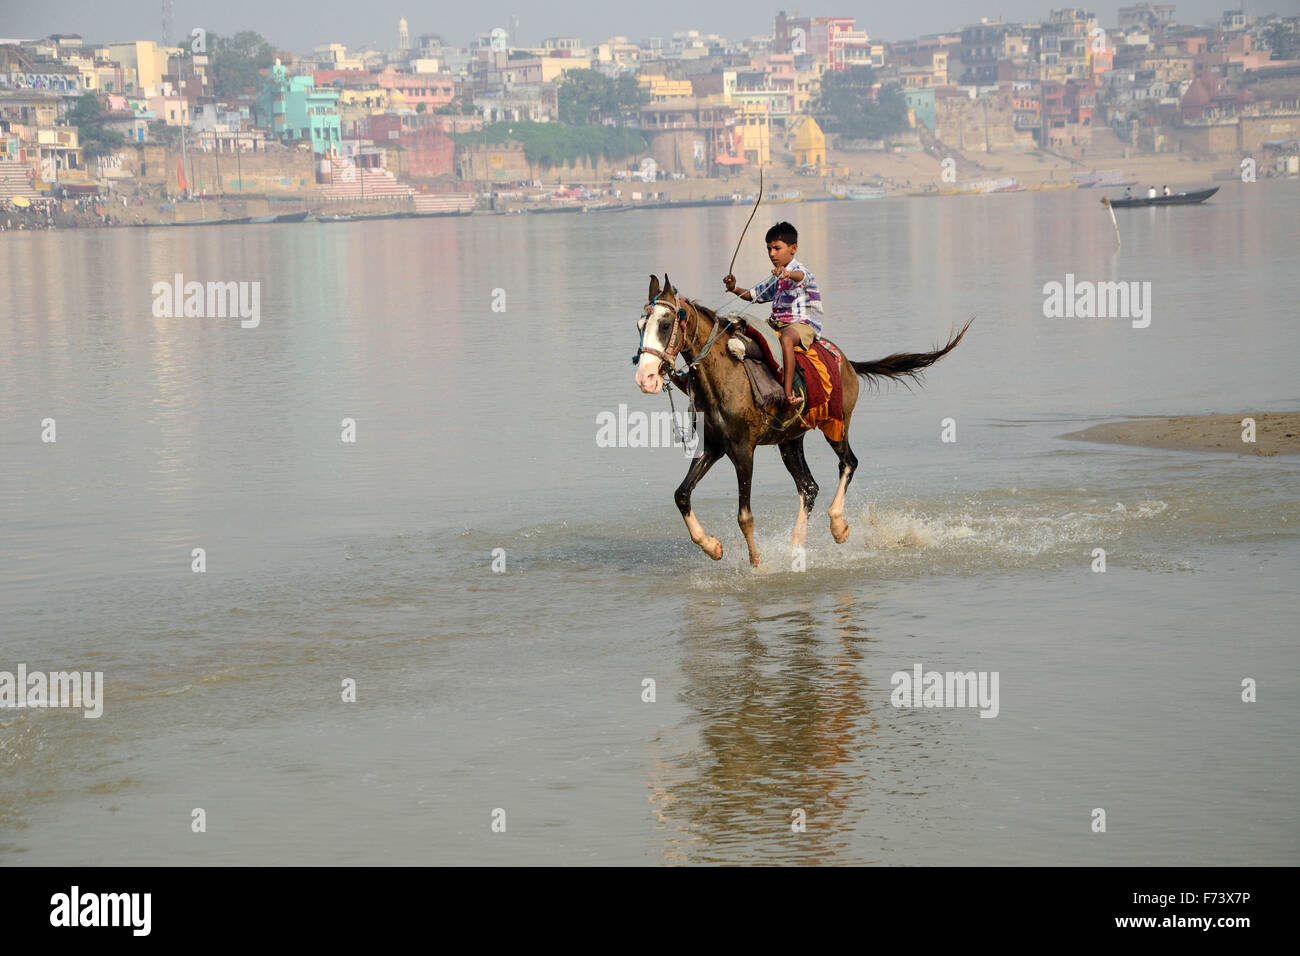 Boy running horse riding, gange varanasi, Uttar Pradesh, Inde, Asie Banque D'Images